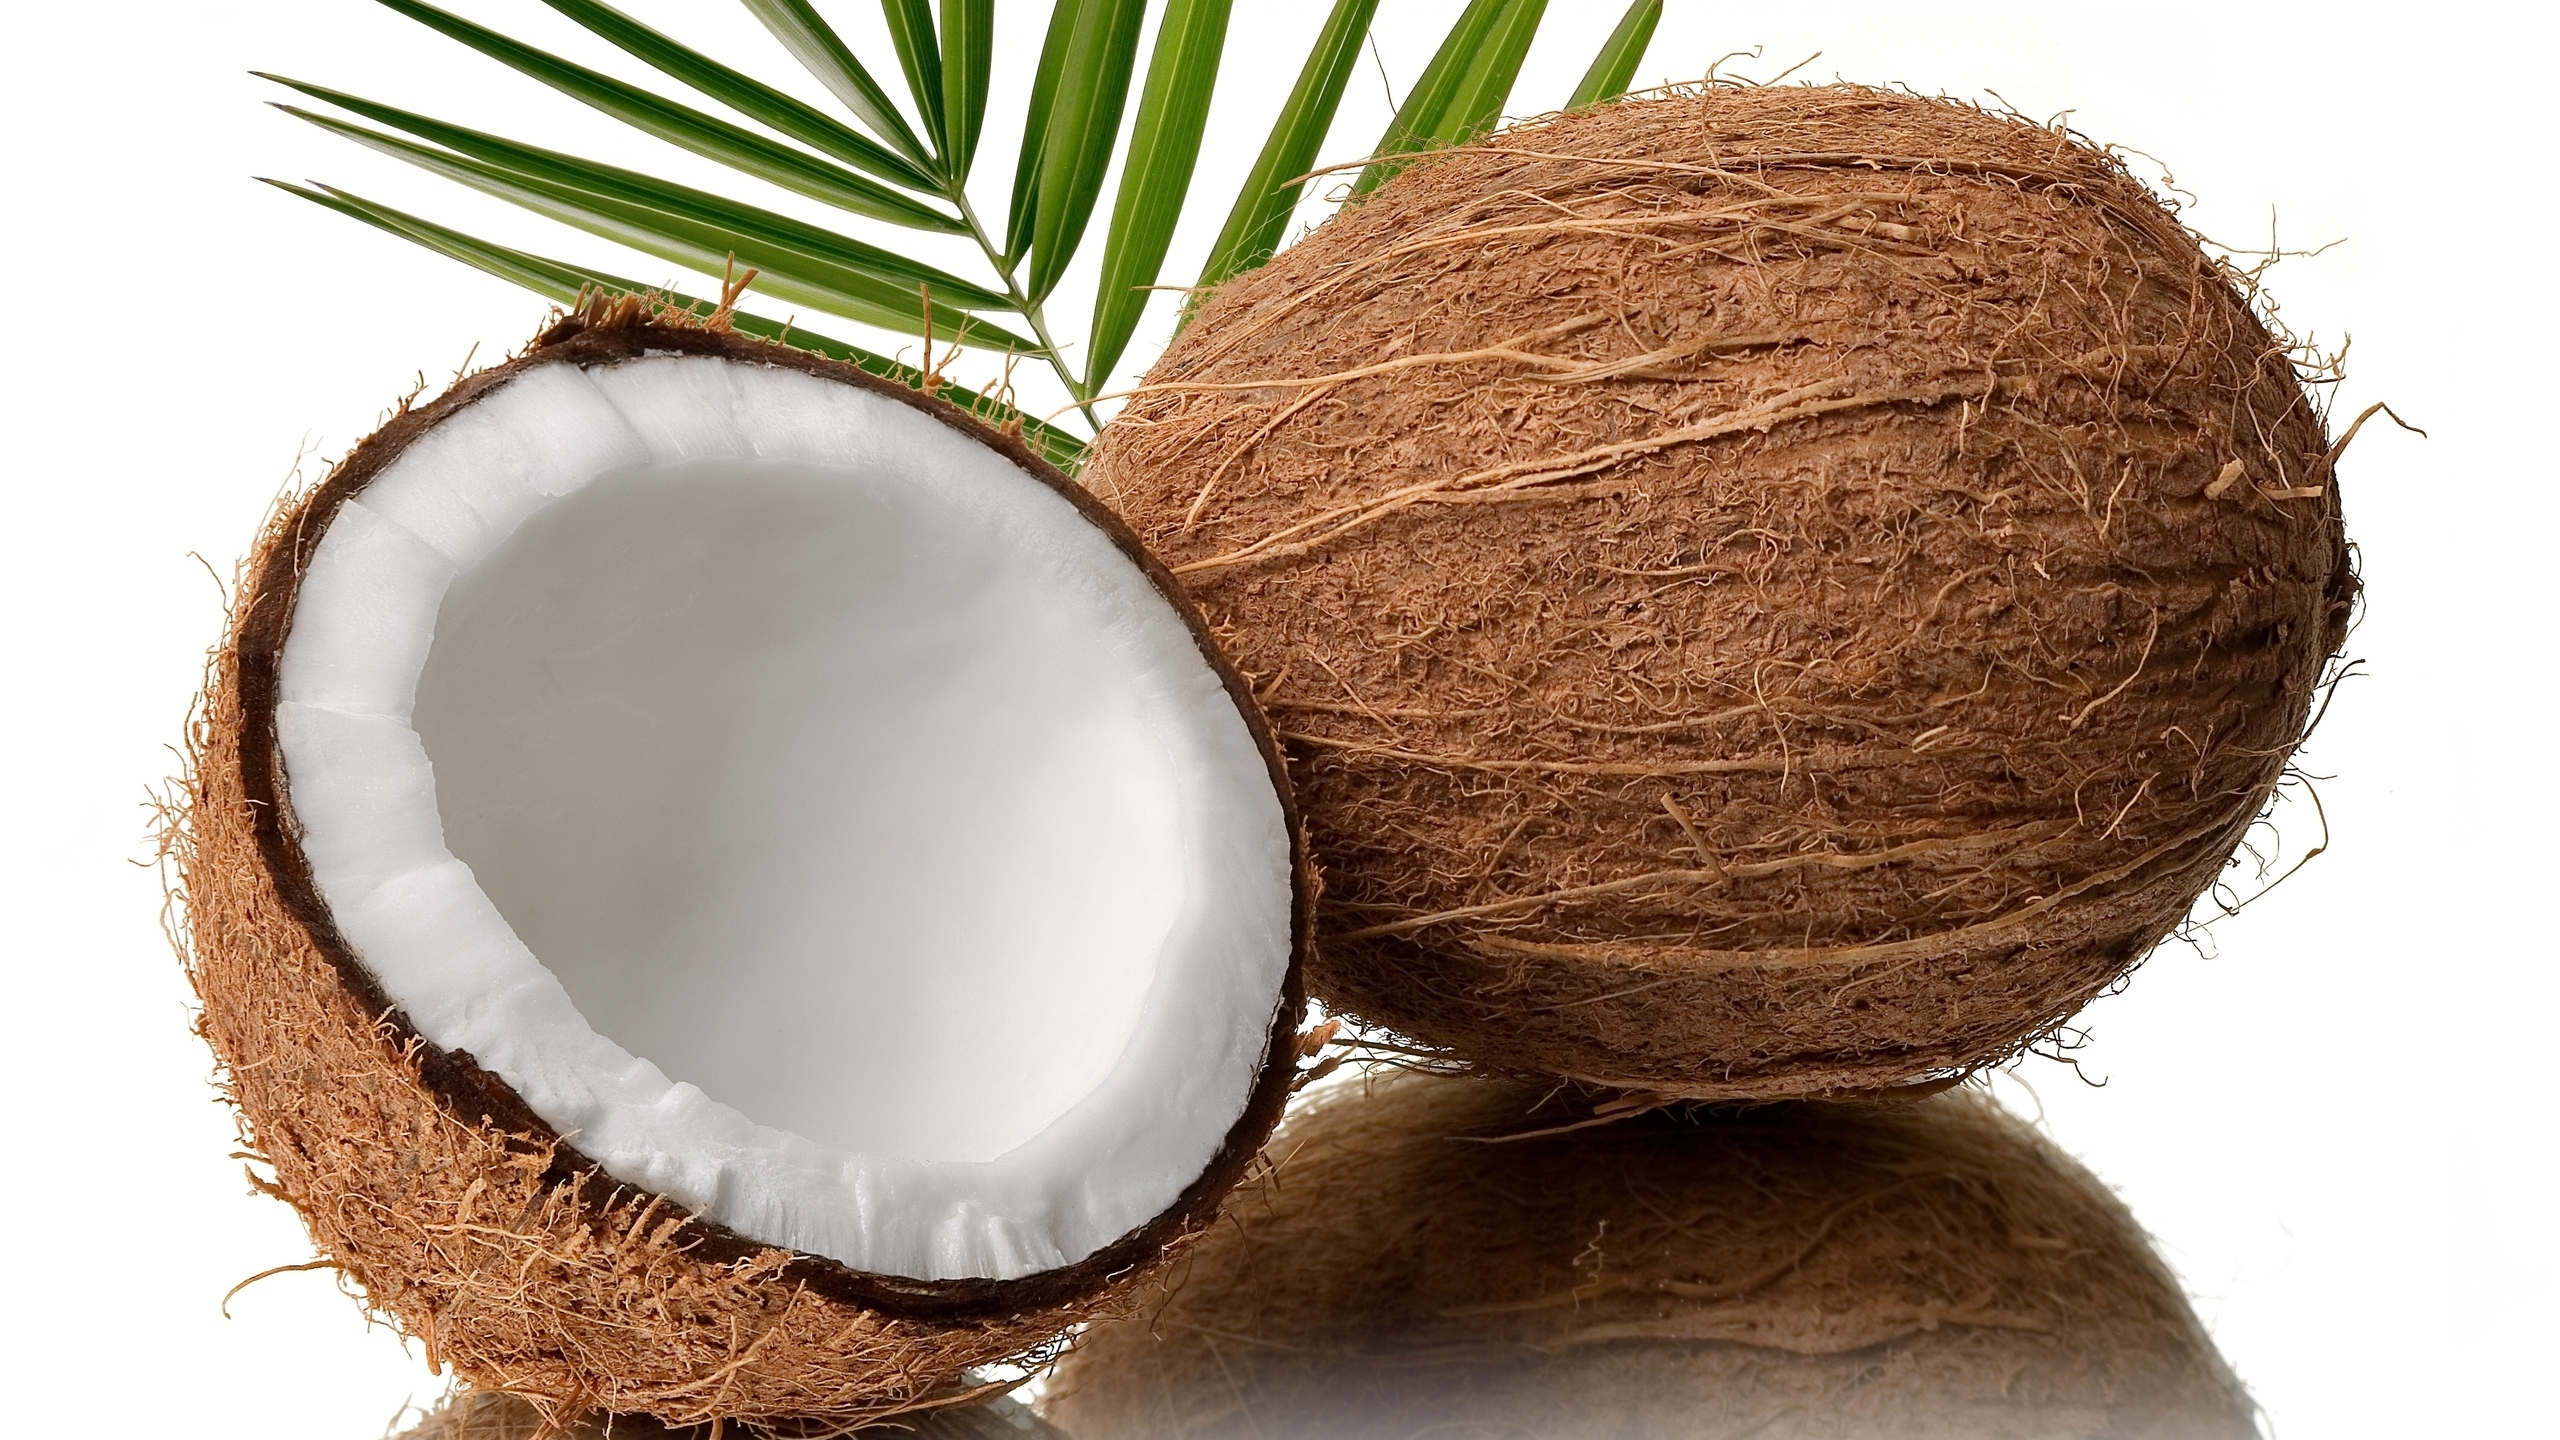 Fresh Coconut for 2560x1440 HDTV resolution